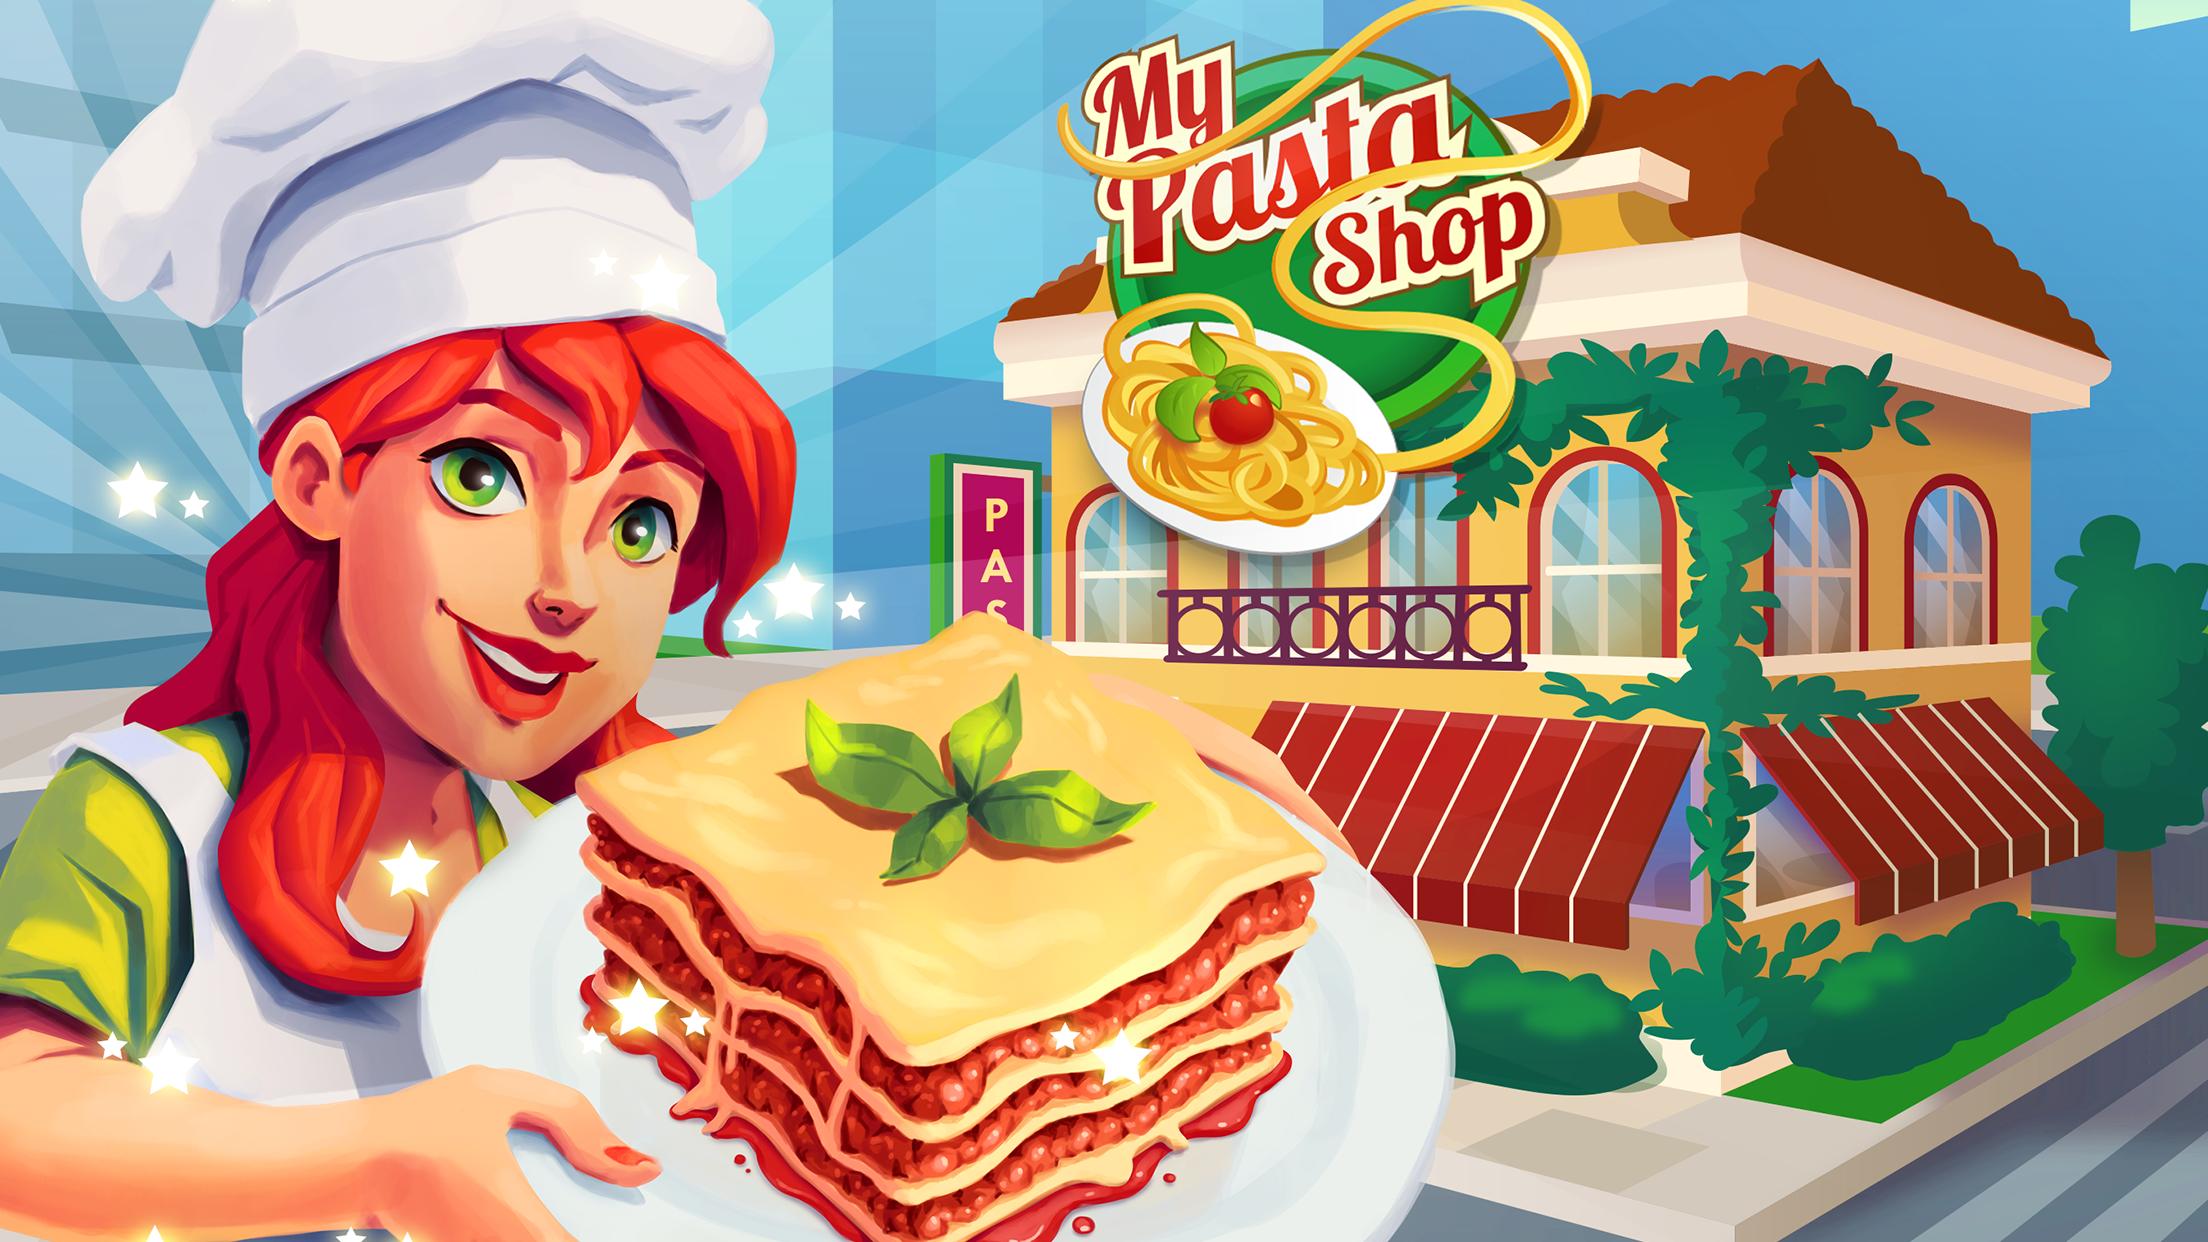 Games play shop. Итальянский ресторан игра. Игра my shop. Игра про ресторан с итальянской кухней. Супер повар.